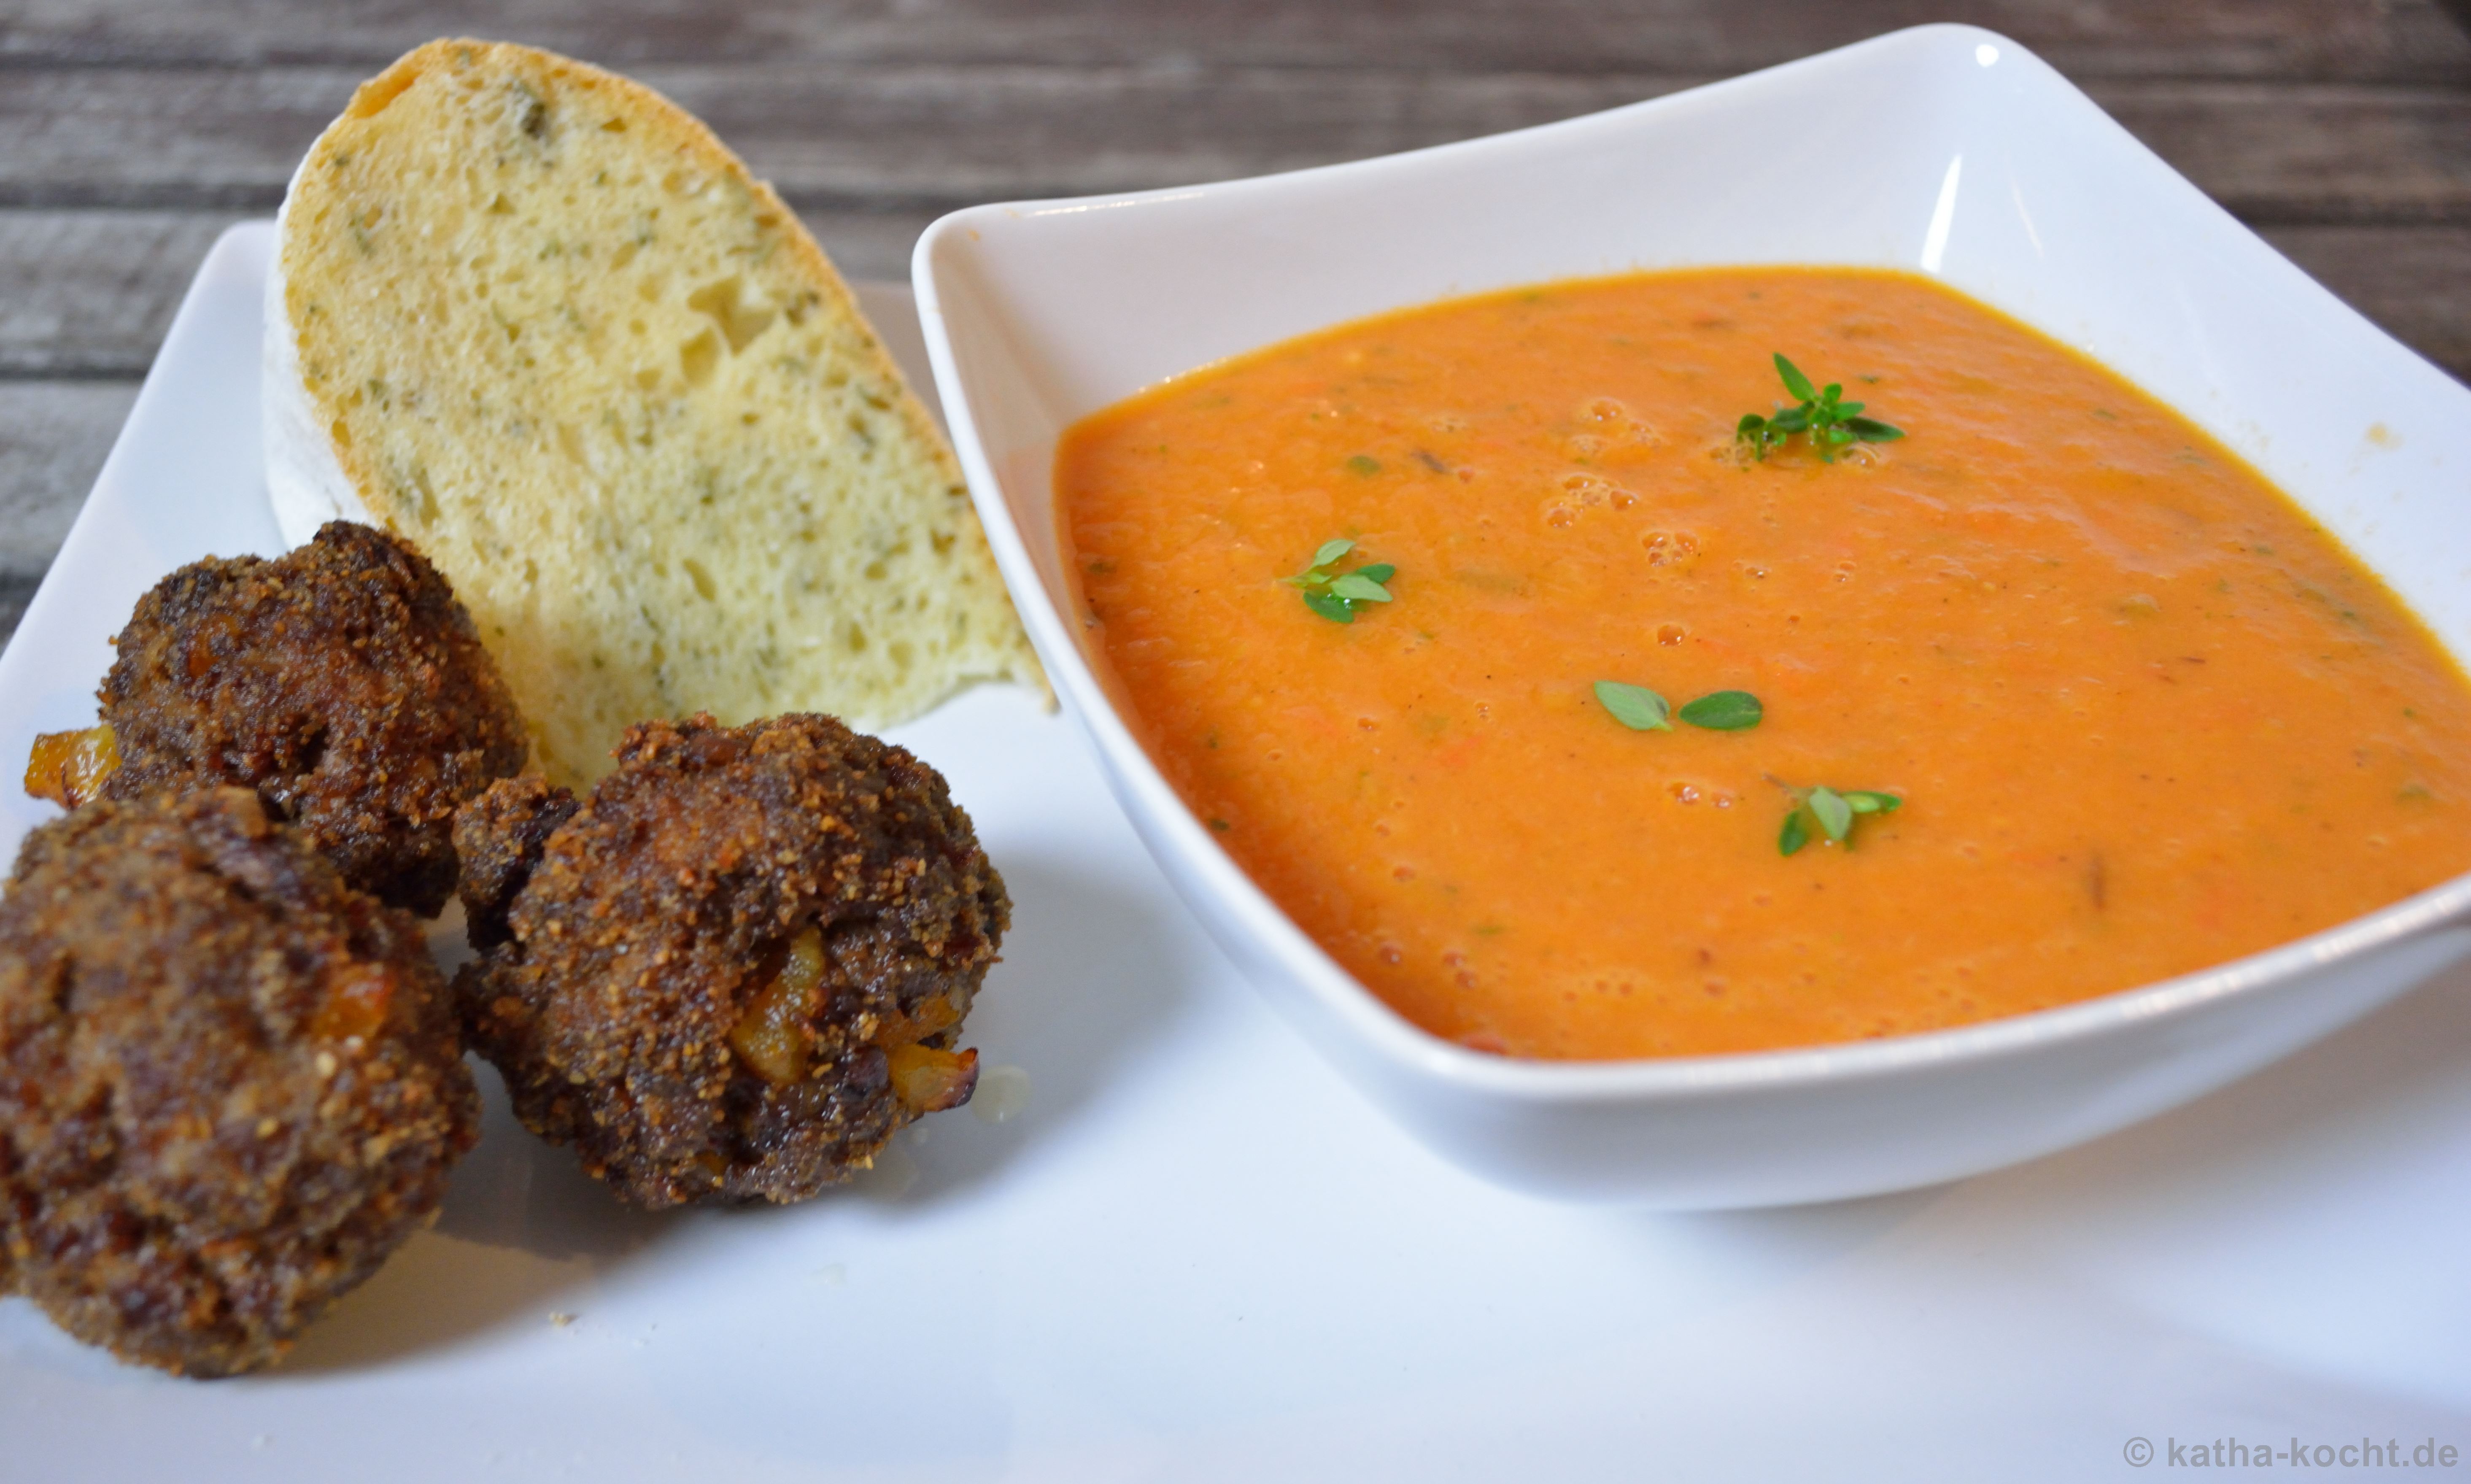 Tomaten-Pflaumen Suppe mit Dattel-Hackbällchen - Katha-kocht!